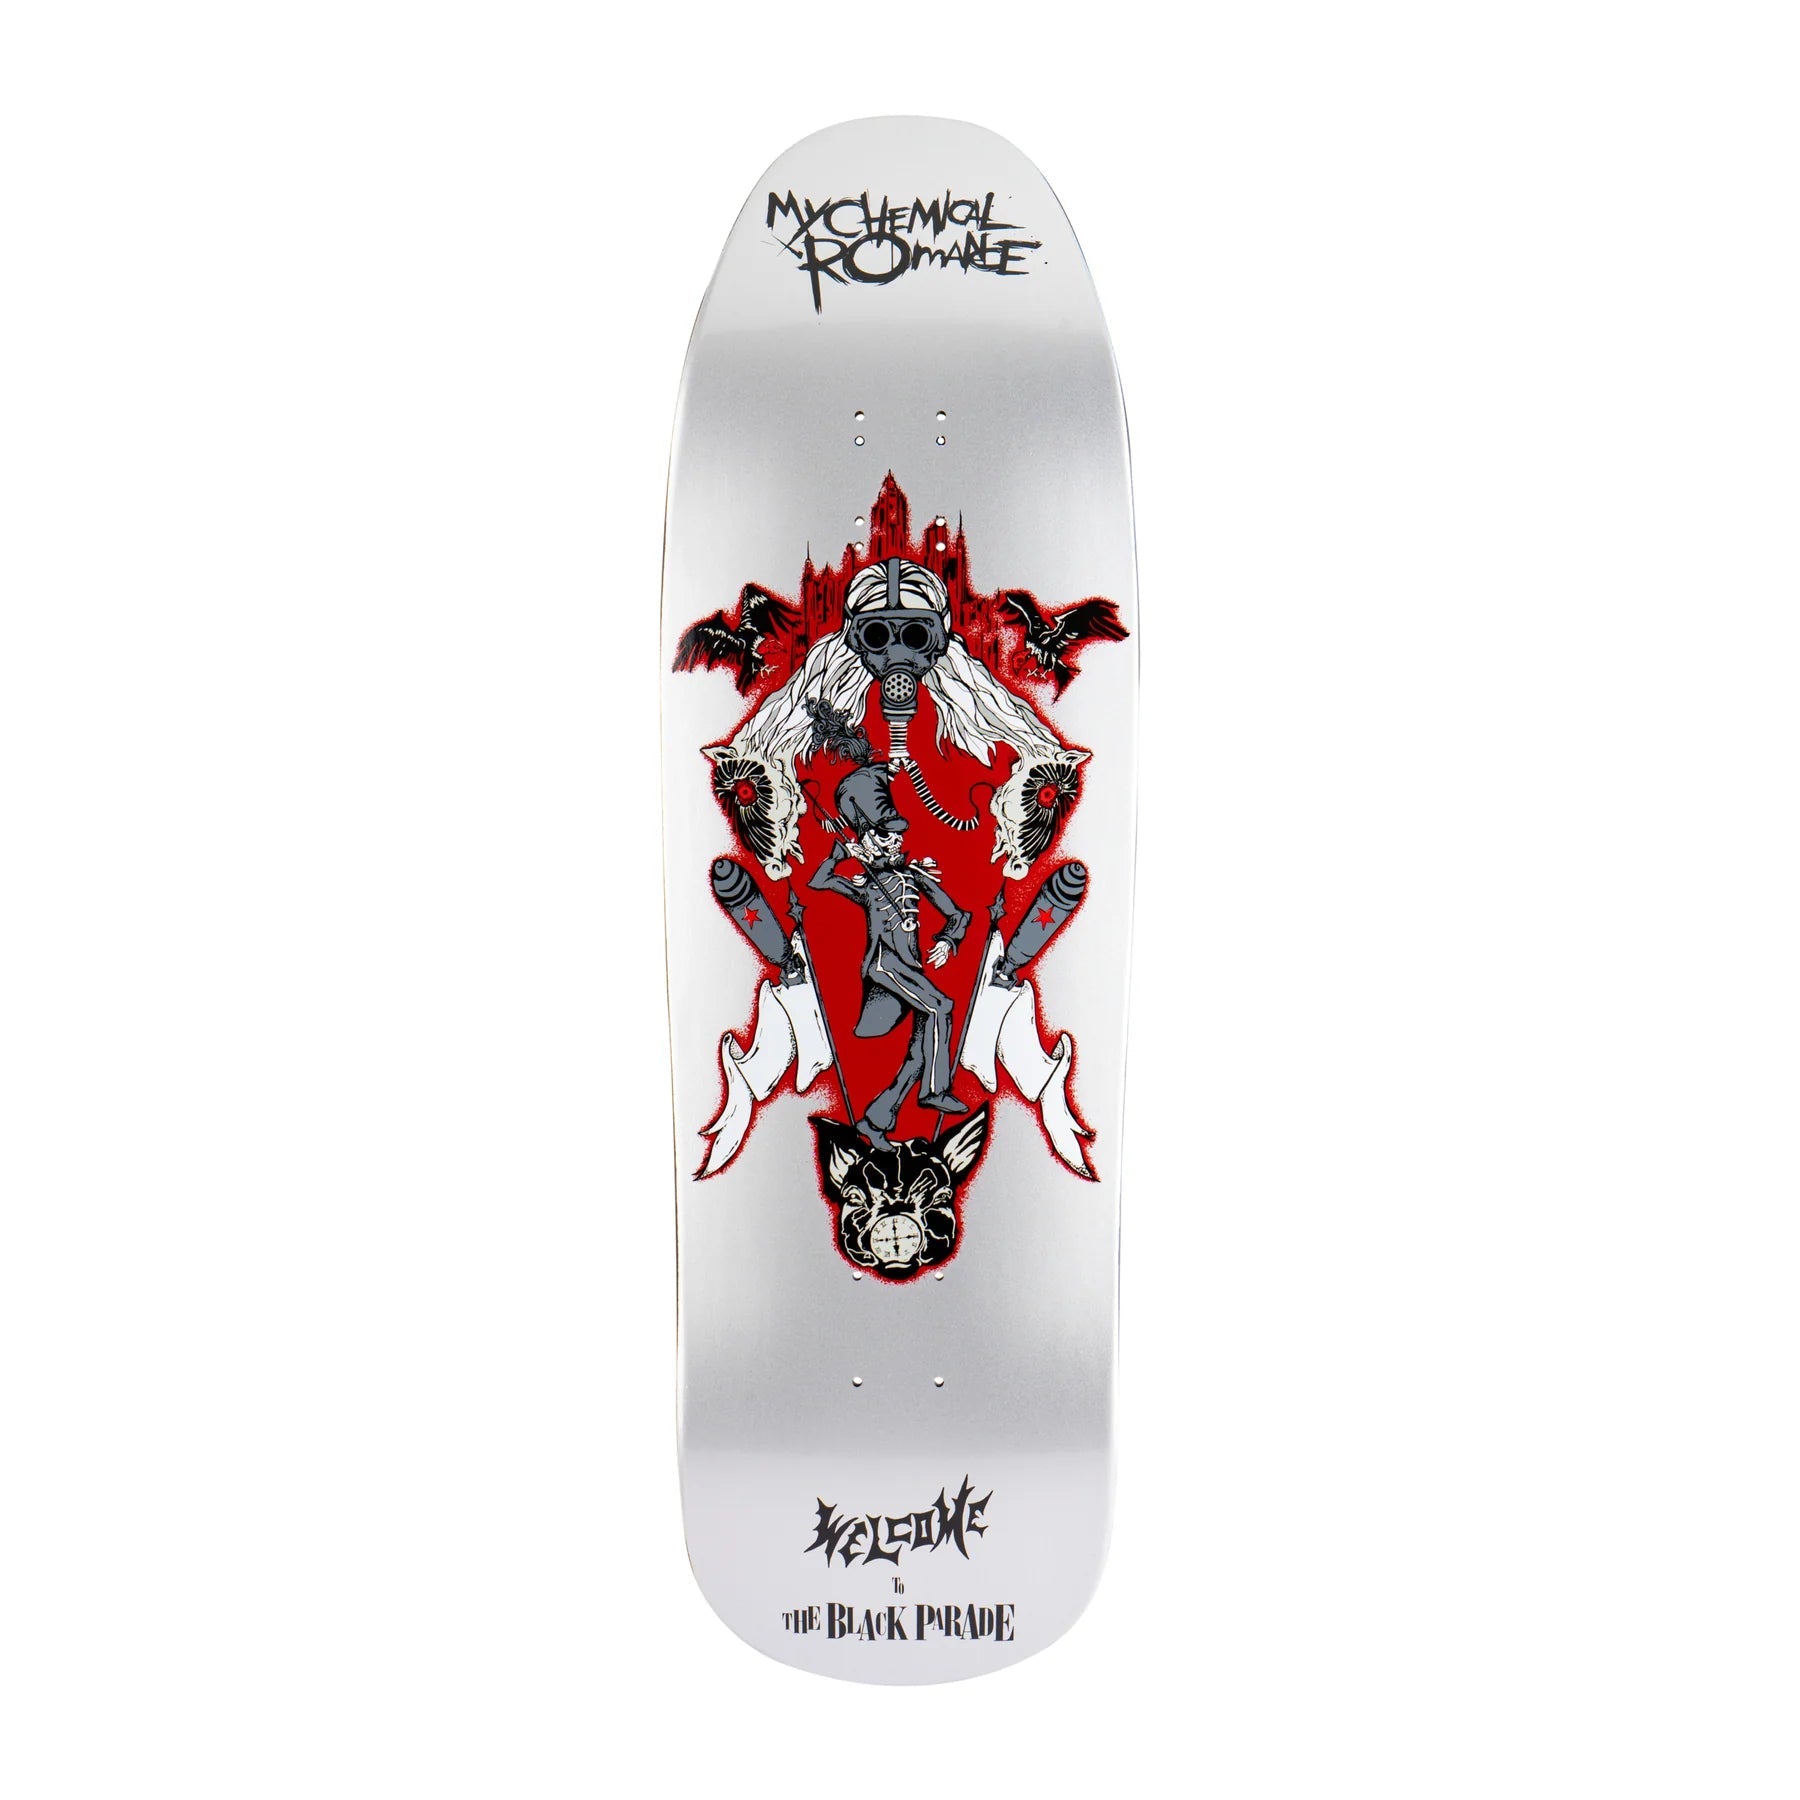 Welcome The Black Parade - My Chemical Romance - Skateboard deck - SkateTillDeath.com